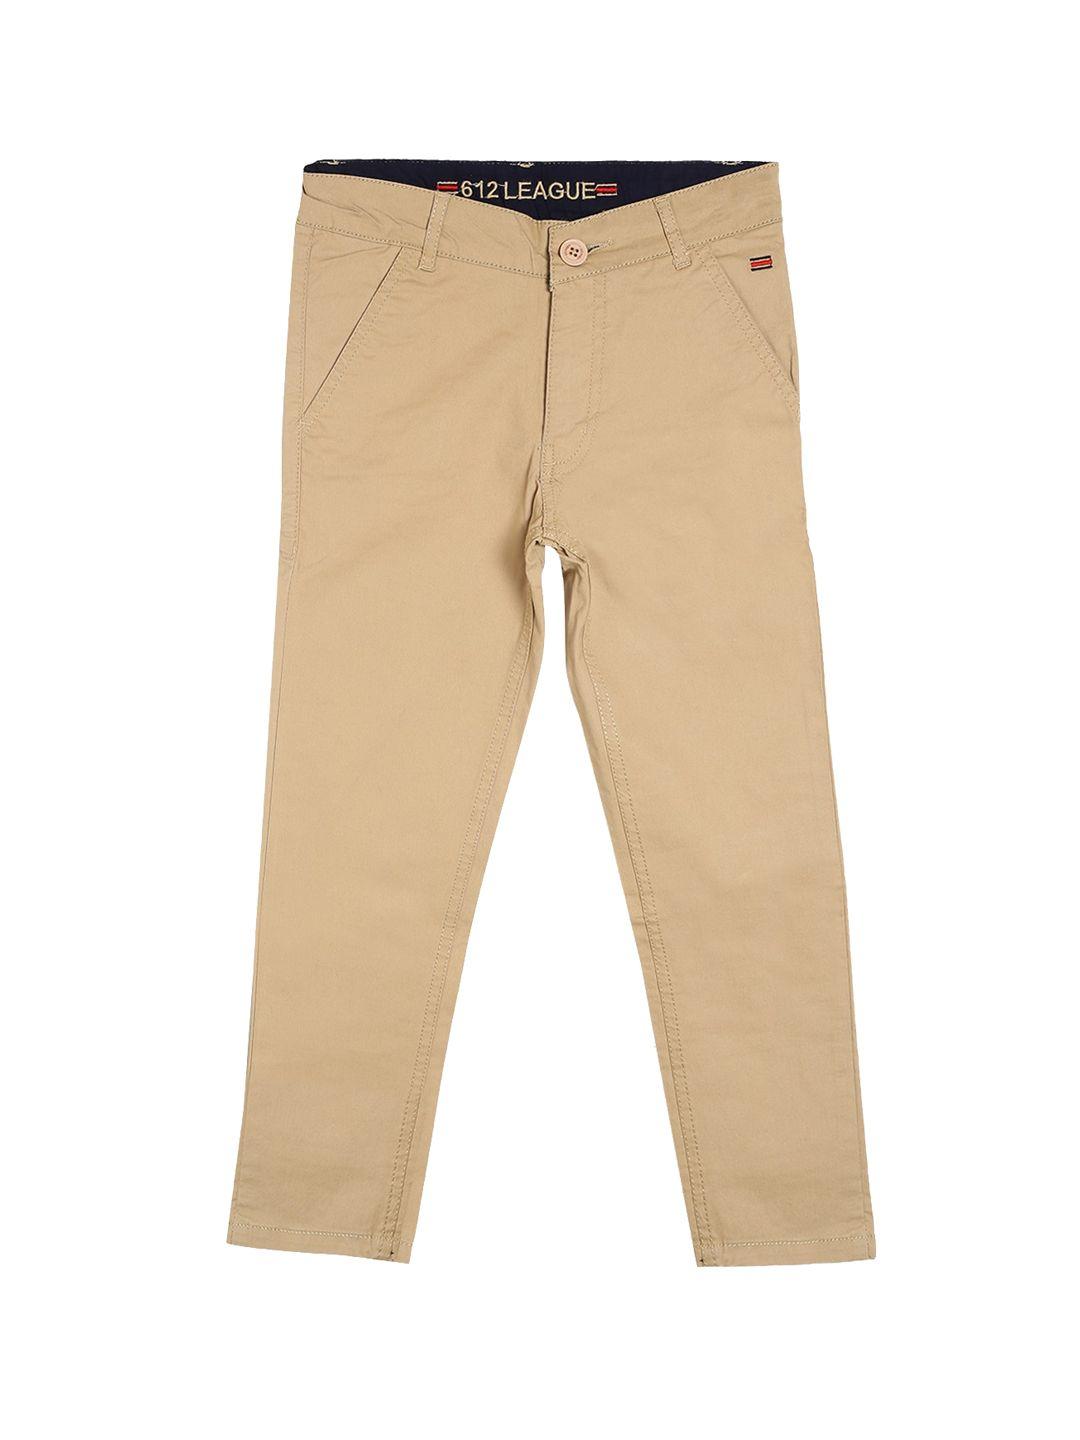 612league boys khaki cotton chinos trousers